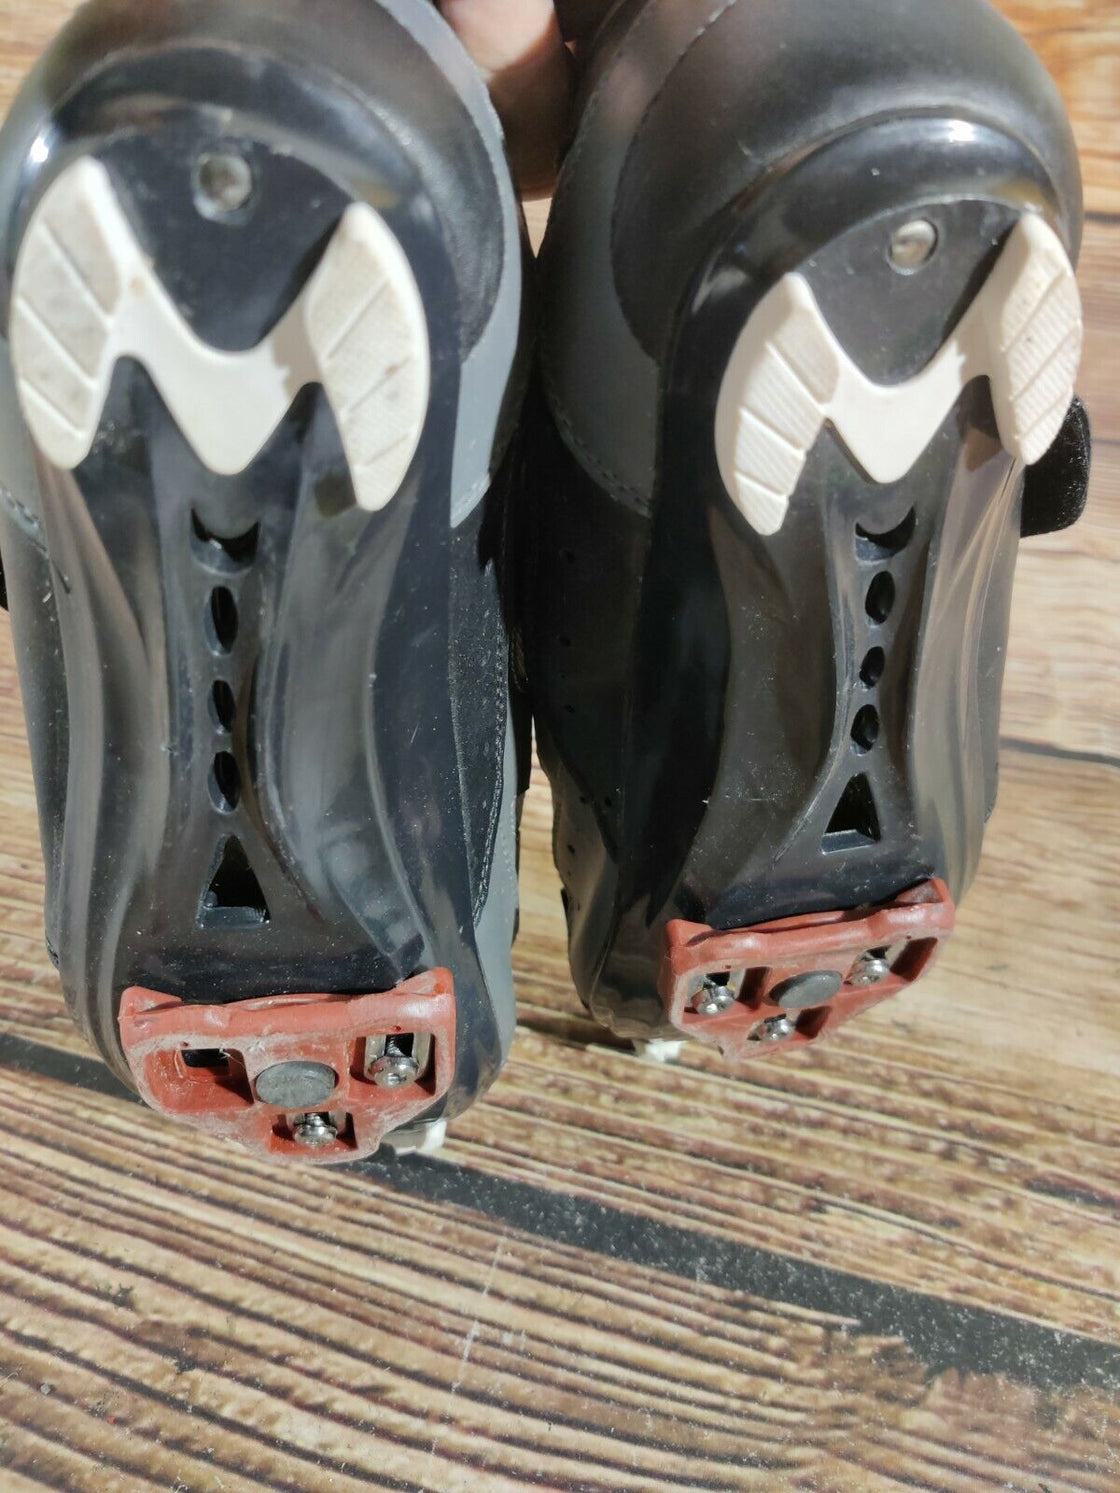 OZON Road Cycling Shoes Biking Boots 3 Bolts Size EU45, US11.5